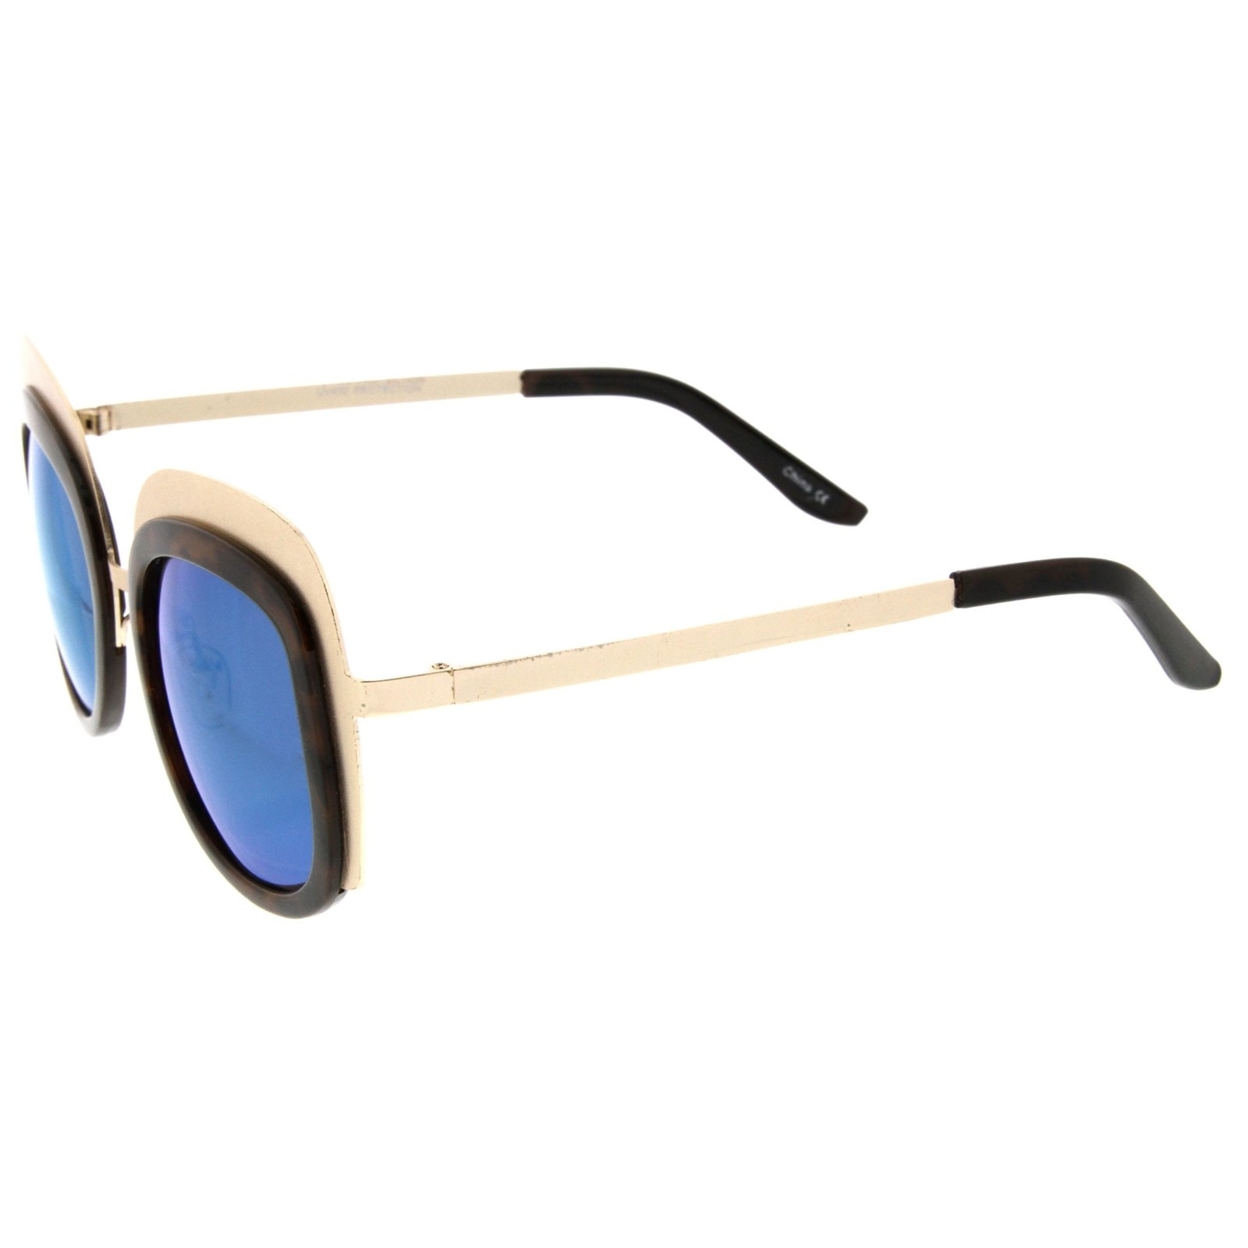 Oversize Metal Frame Border Colored Mirror Lens Square Sunglasses 43mm - Gold-Tortoise / Blue Mirror